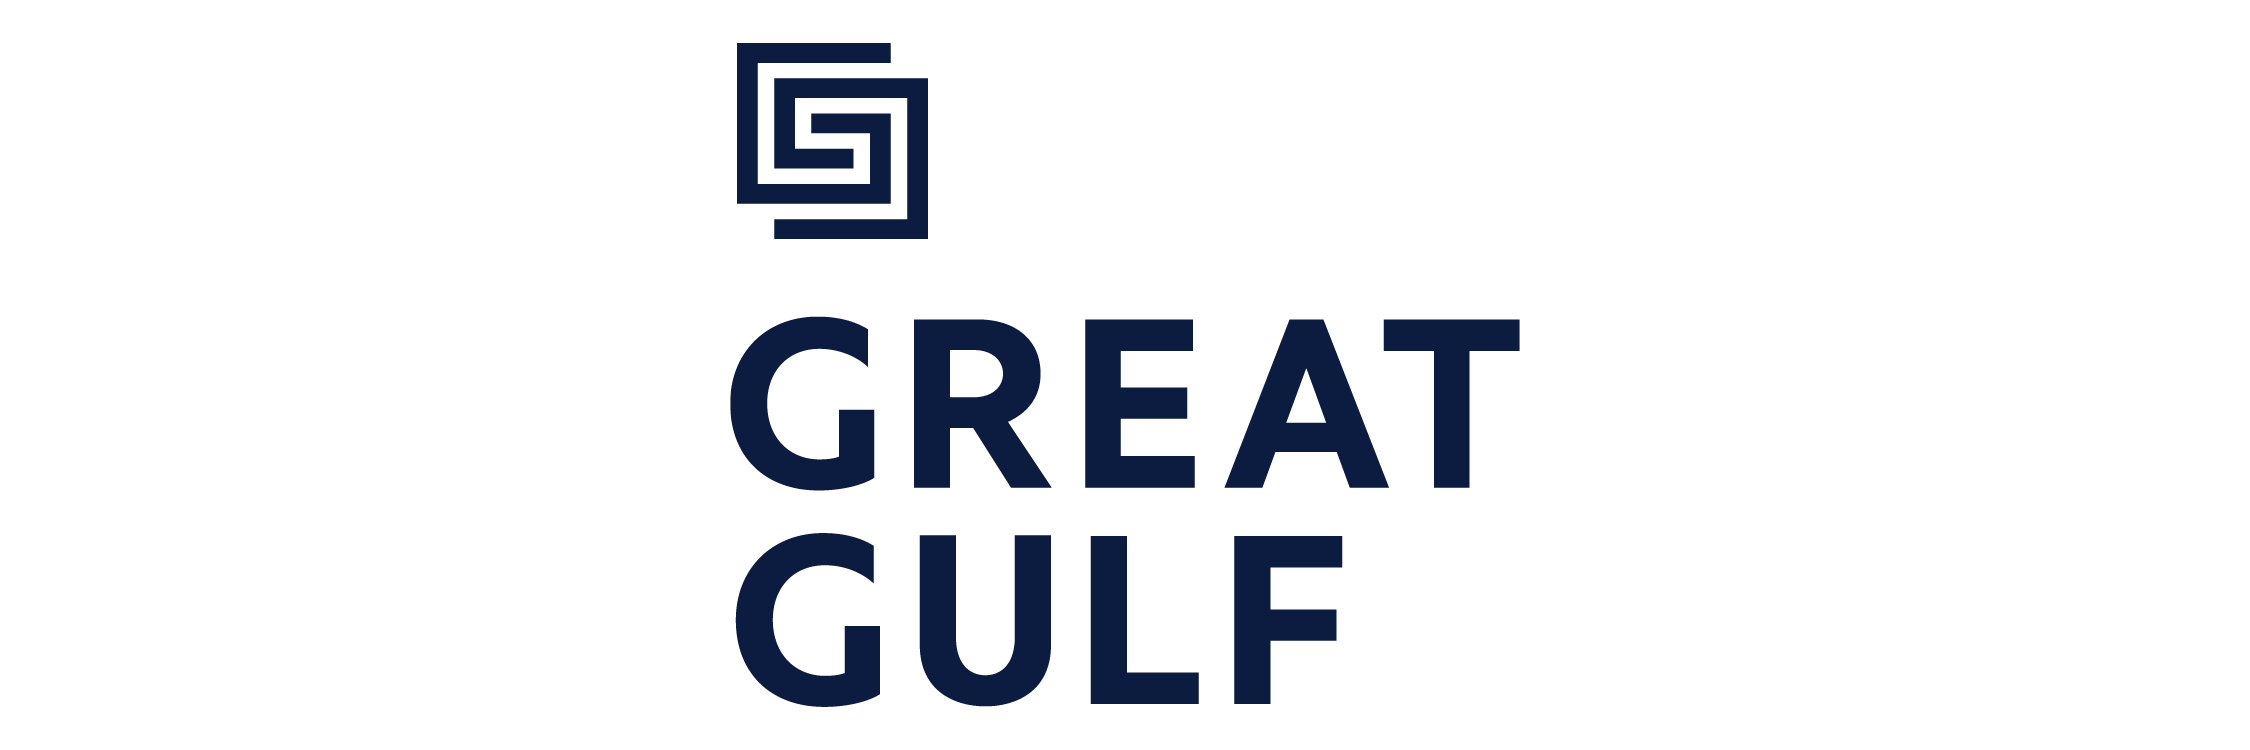 Great Gulf (logo)